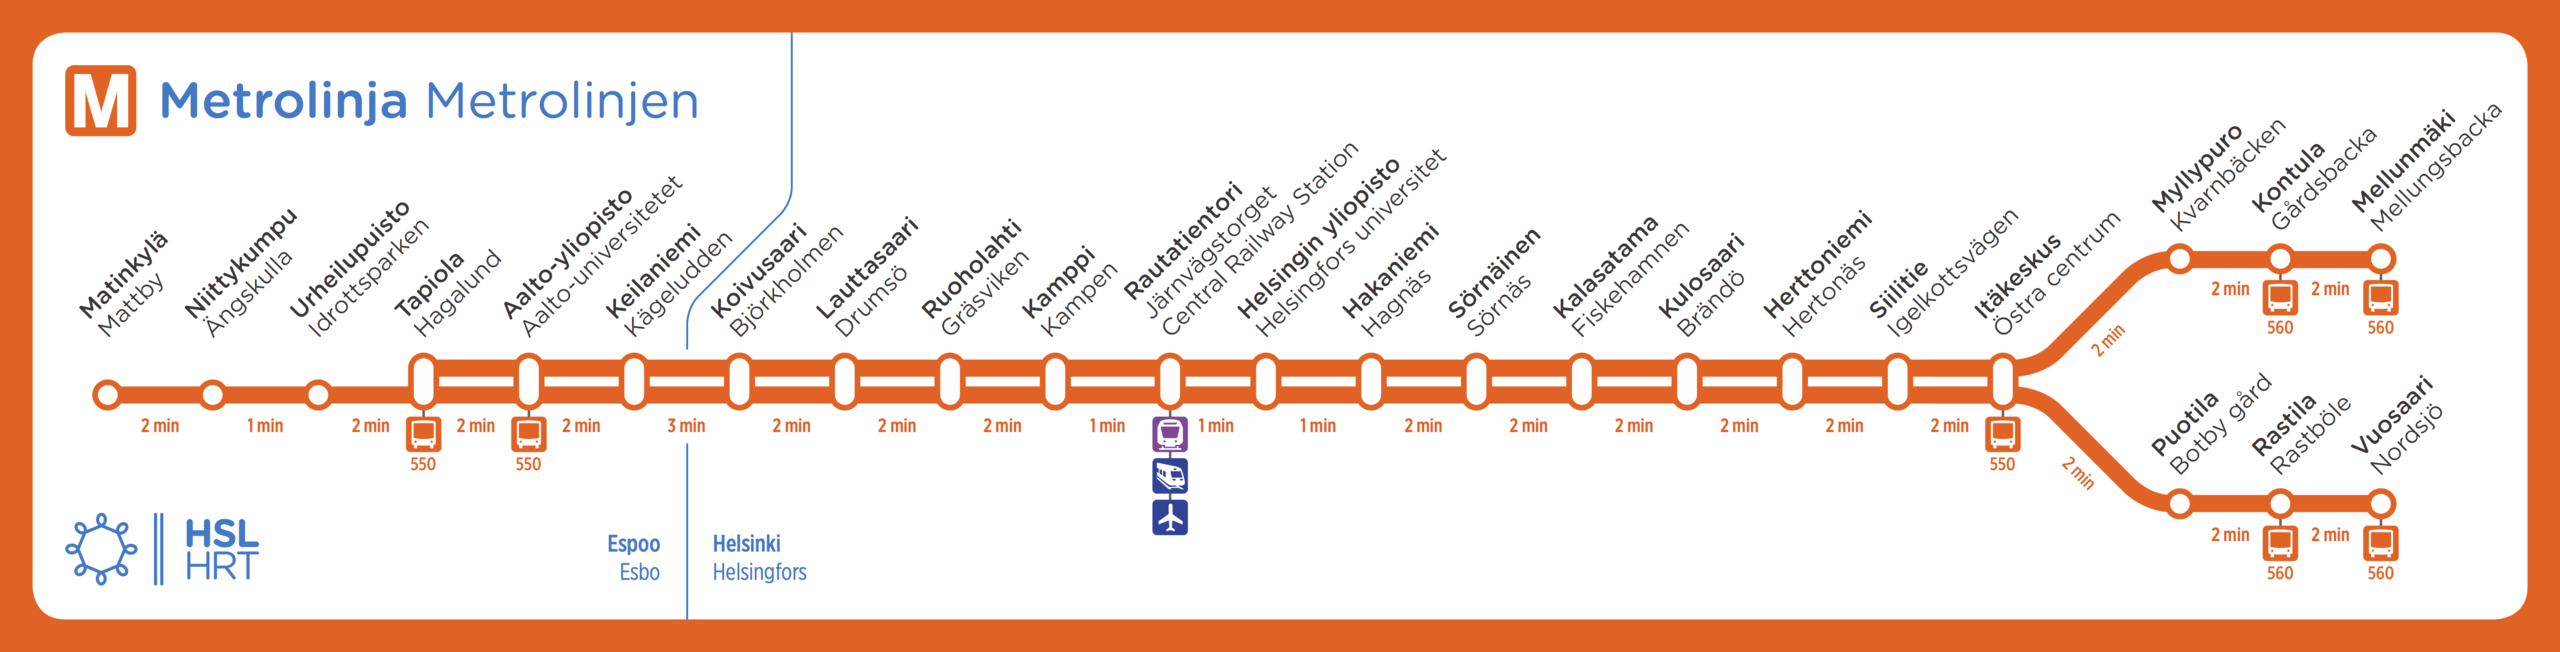 Helsingin metrokartta.